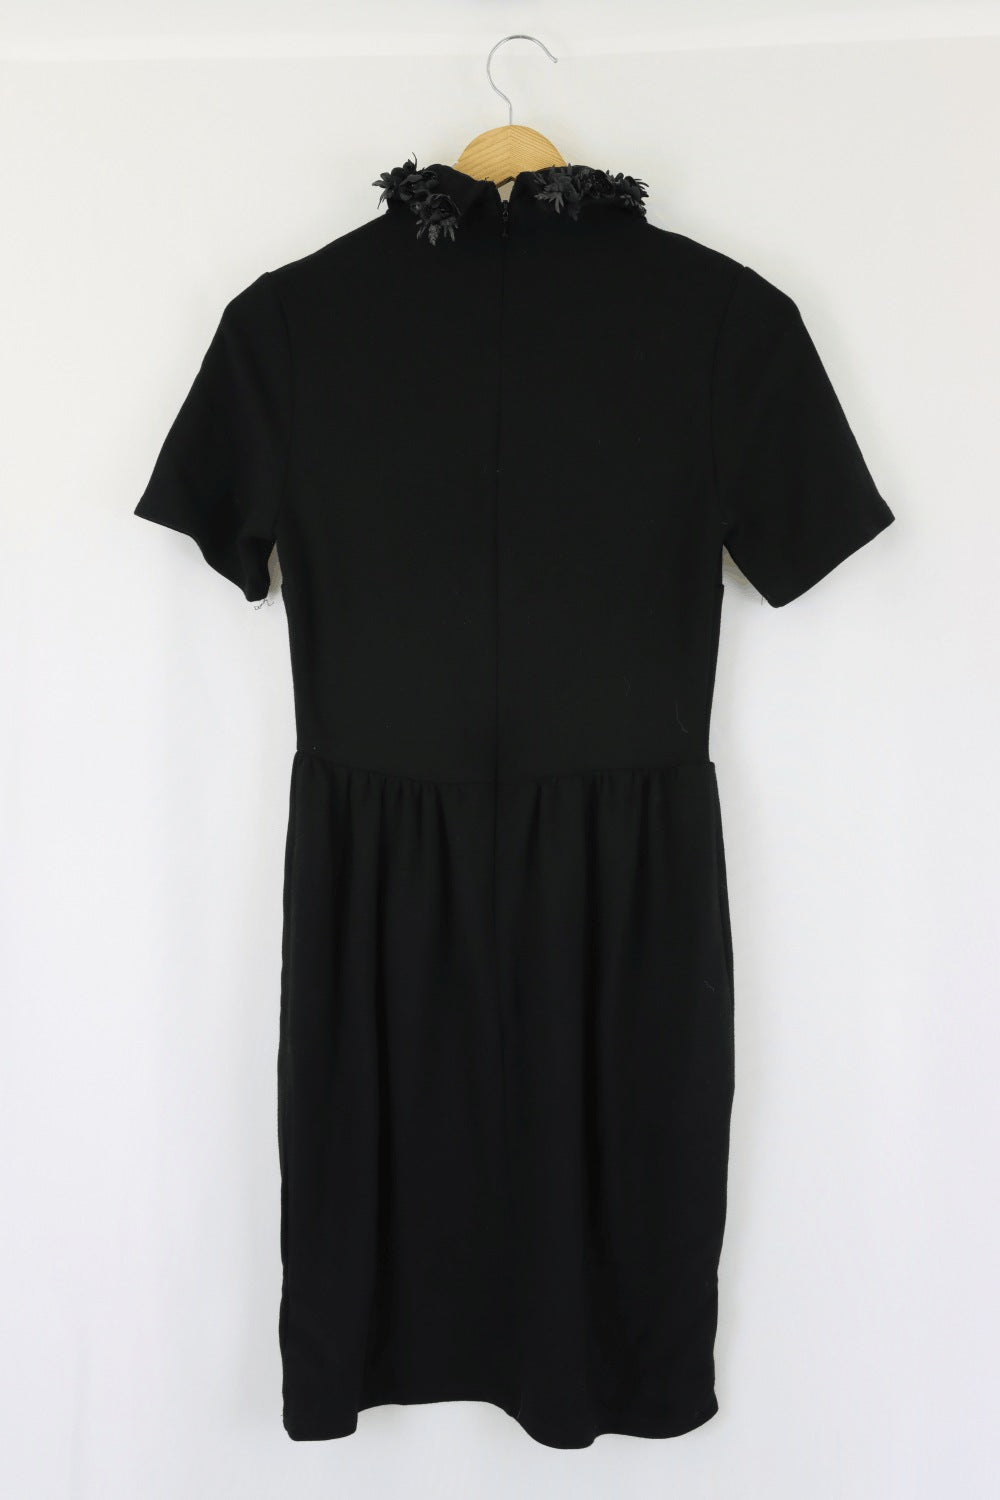 Asos Black Dress 8